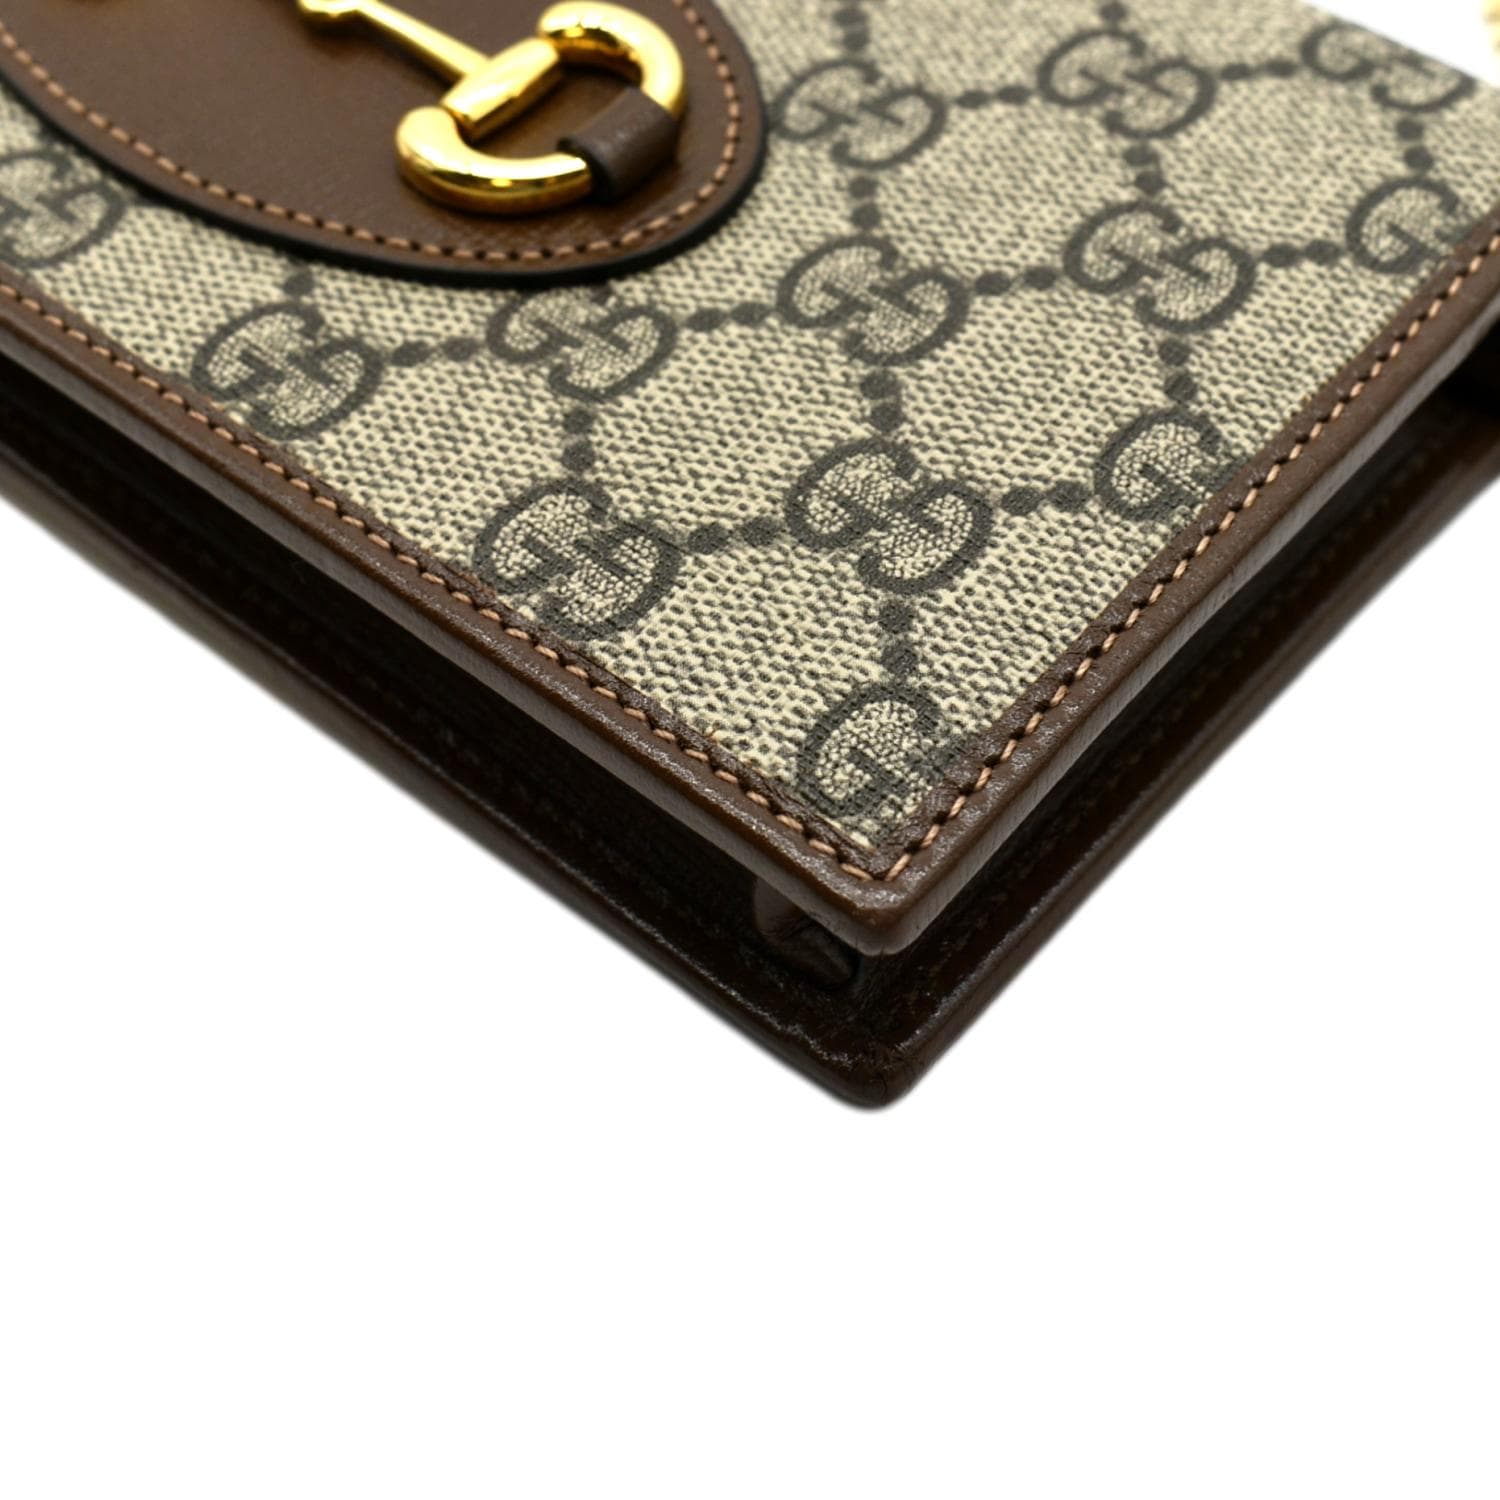 Gucci Horsebit 1955 card case wallet in GG Supreme/brown